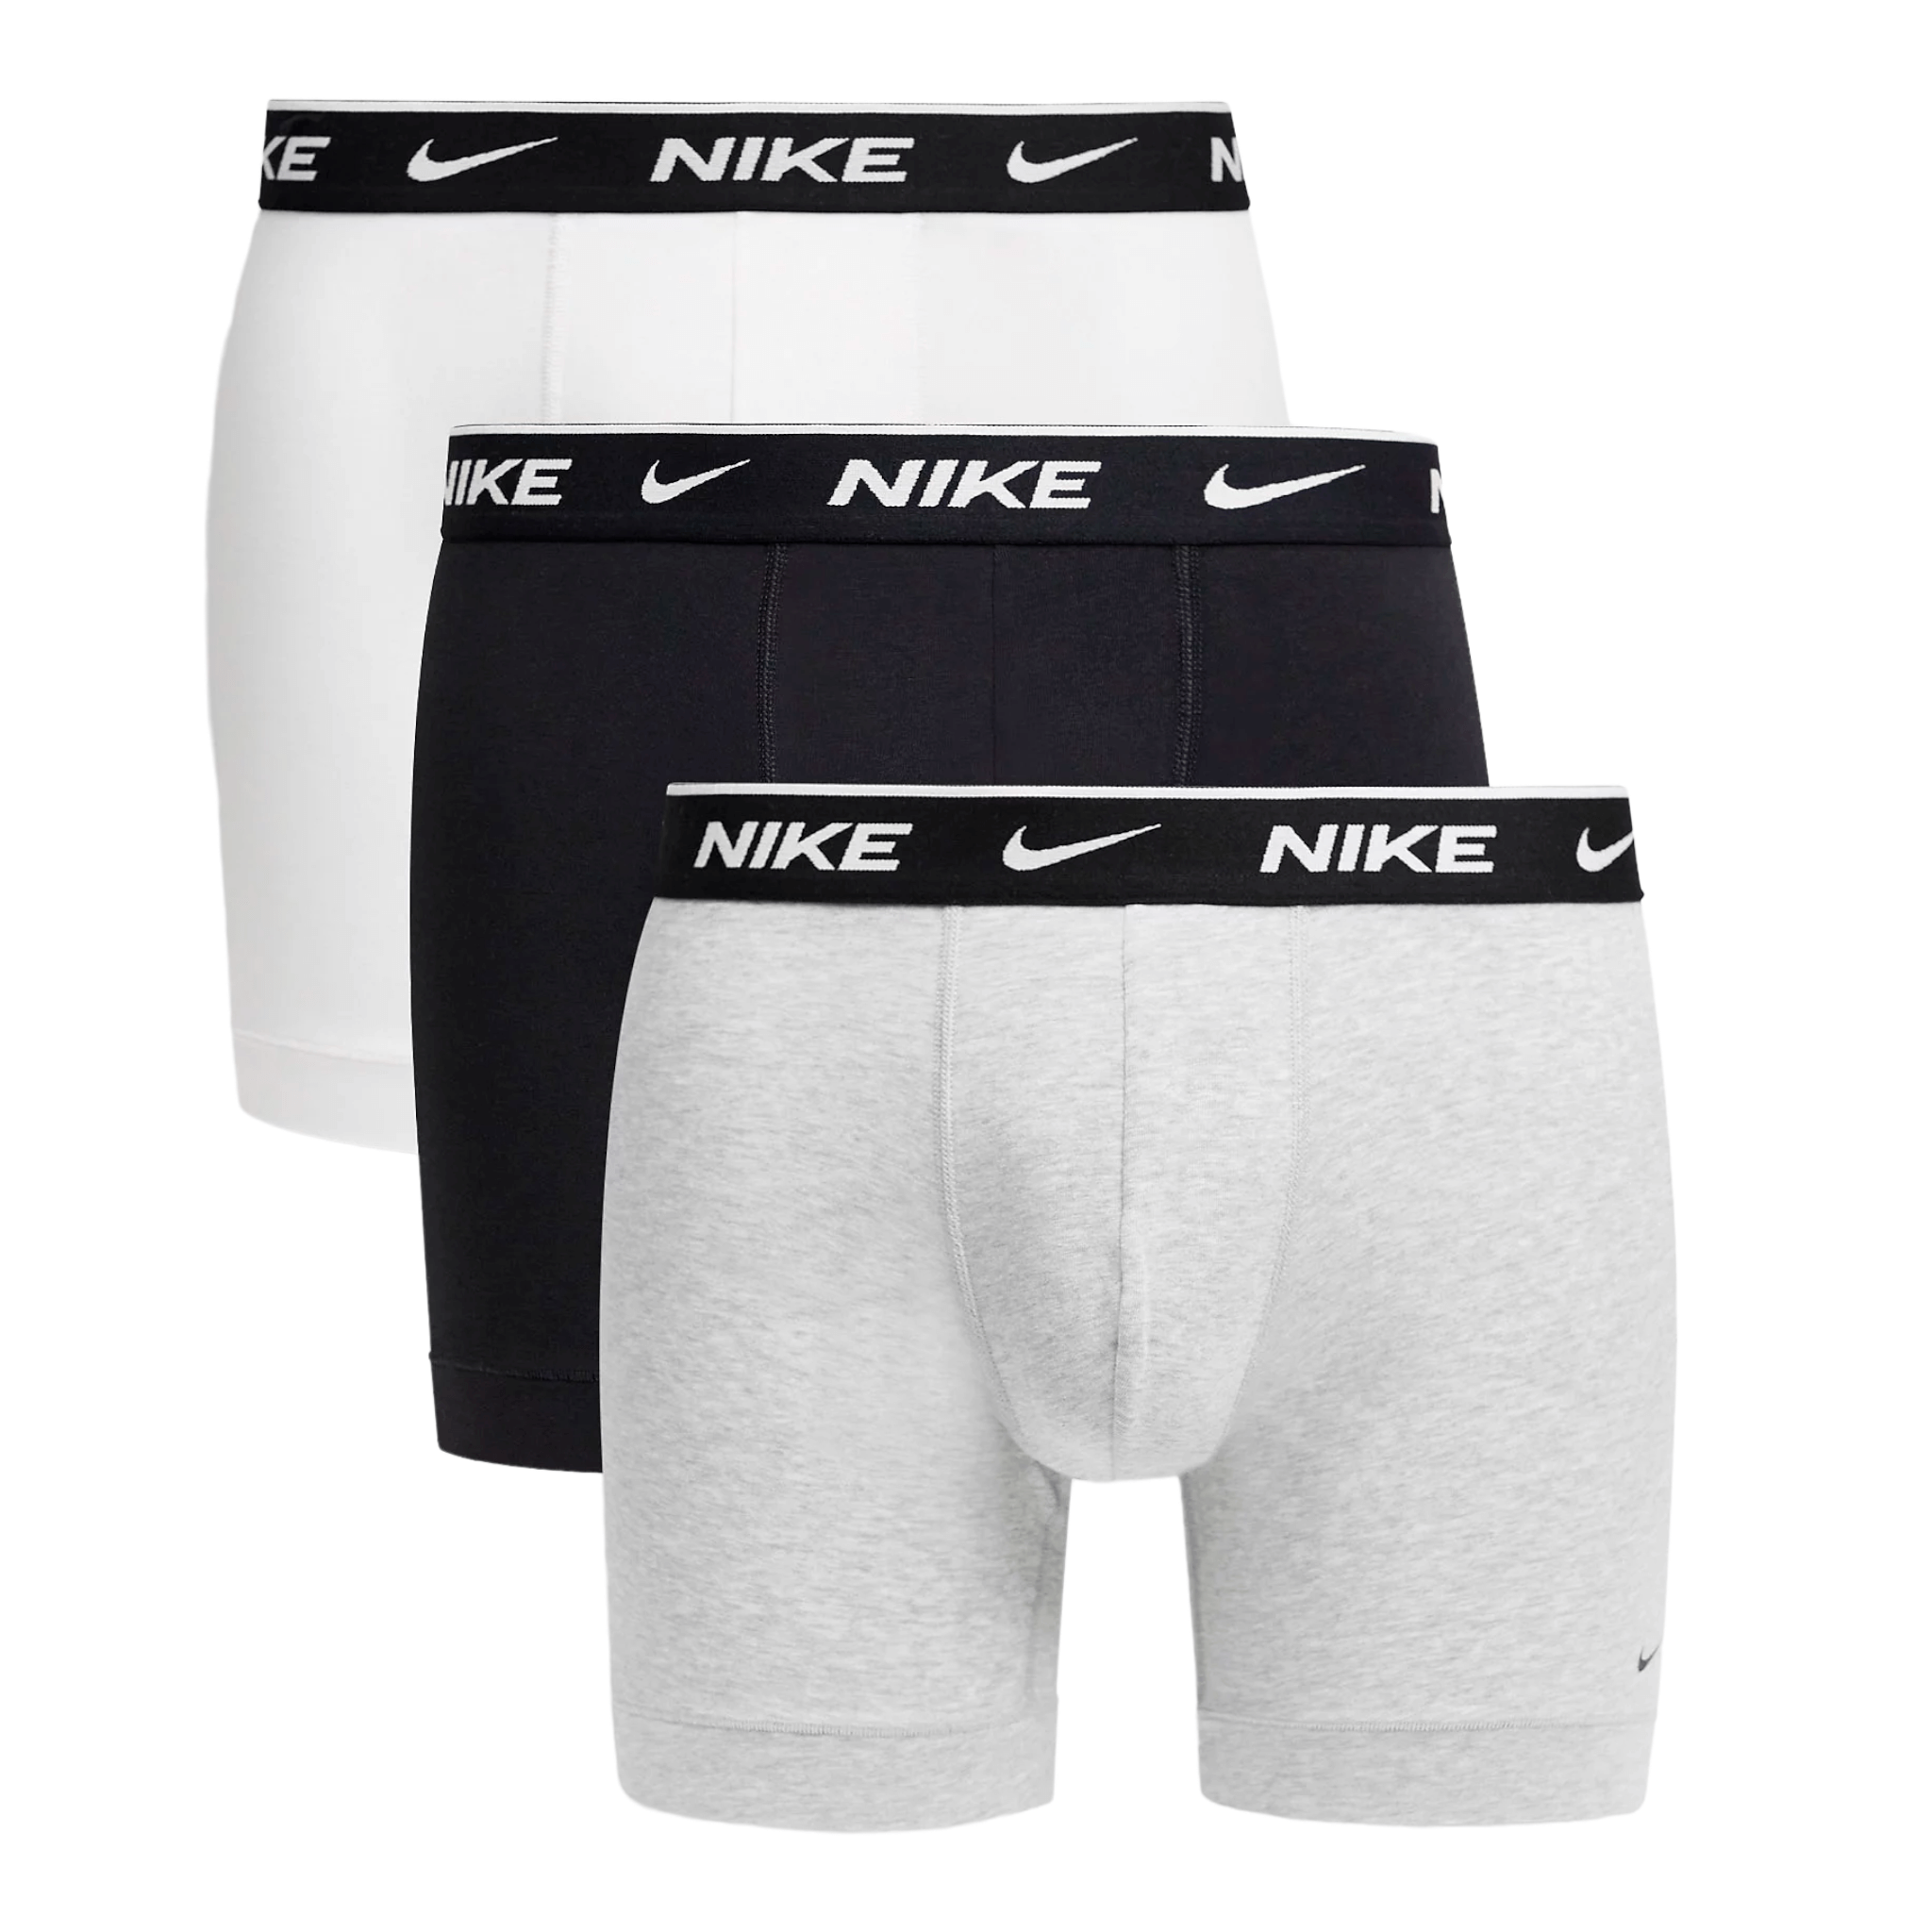 Трусы боксеры Nike Brief 3 Pack, 3 предмета, белый/черный/серый цена и фото